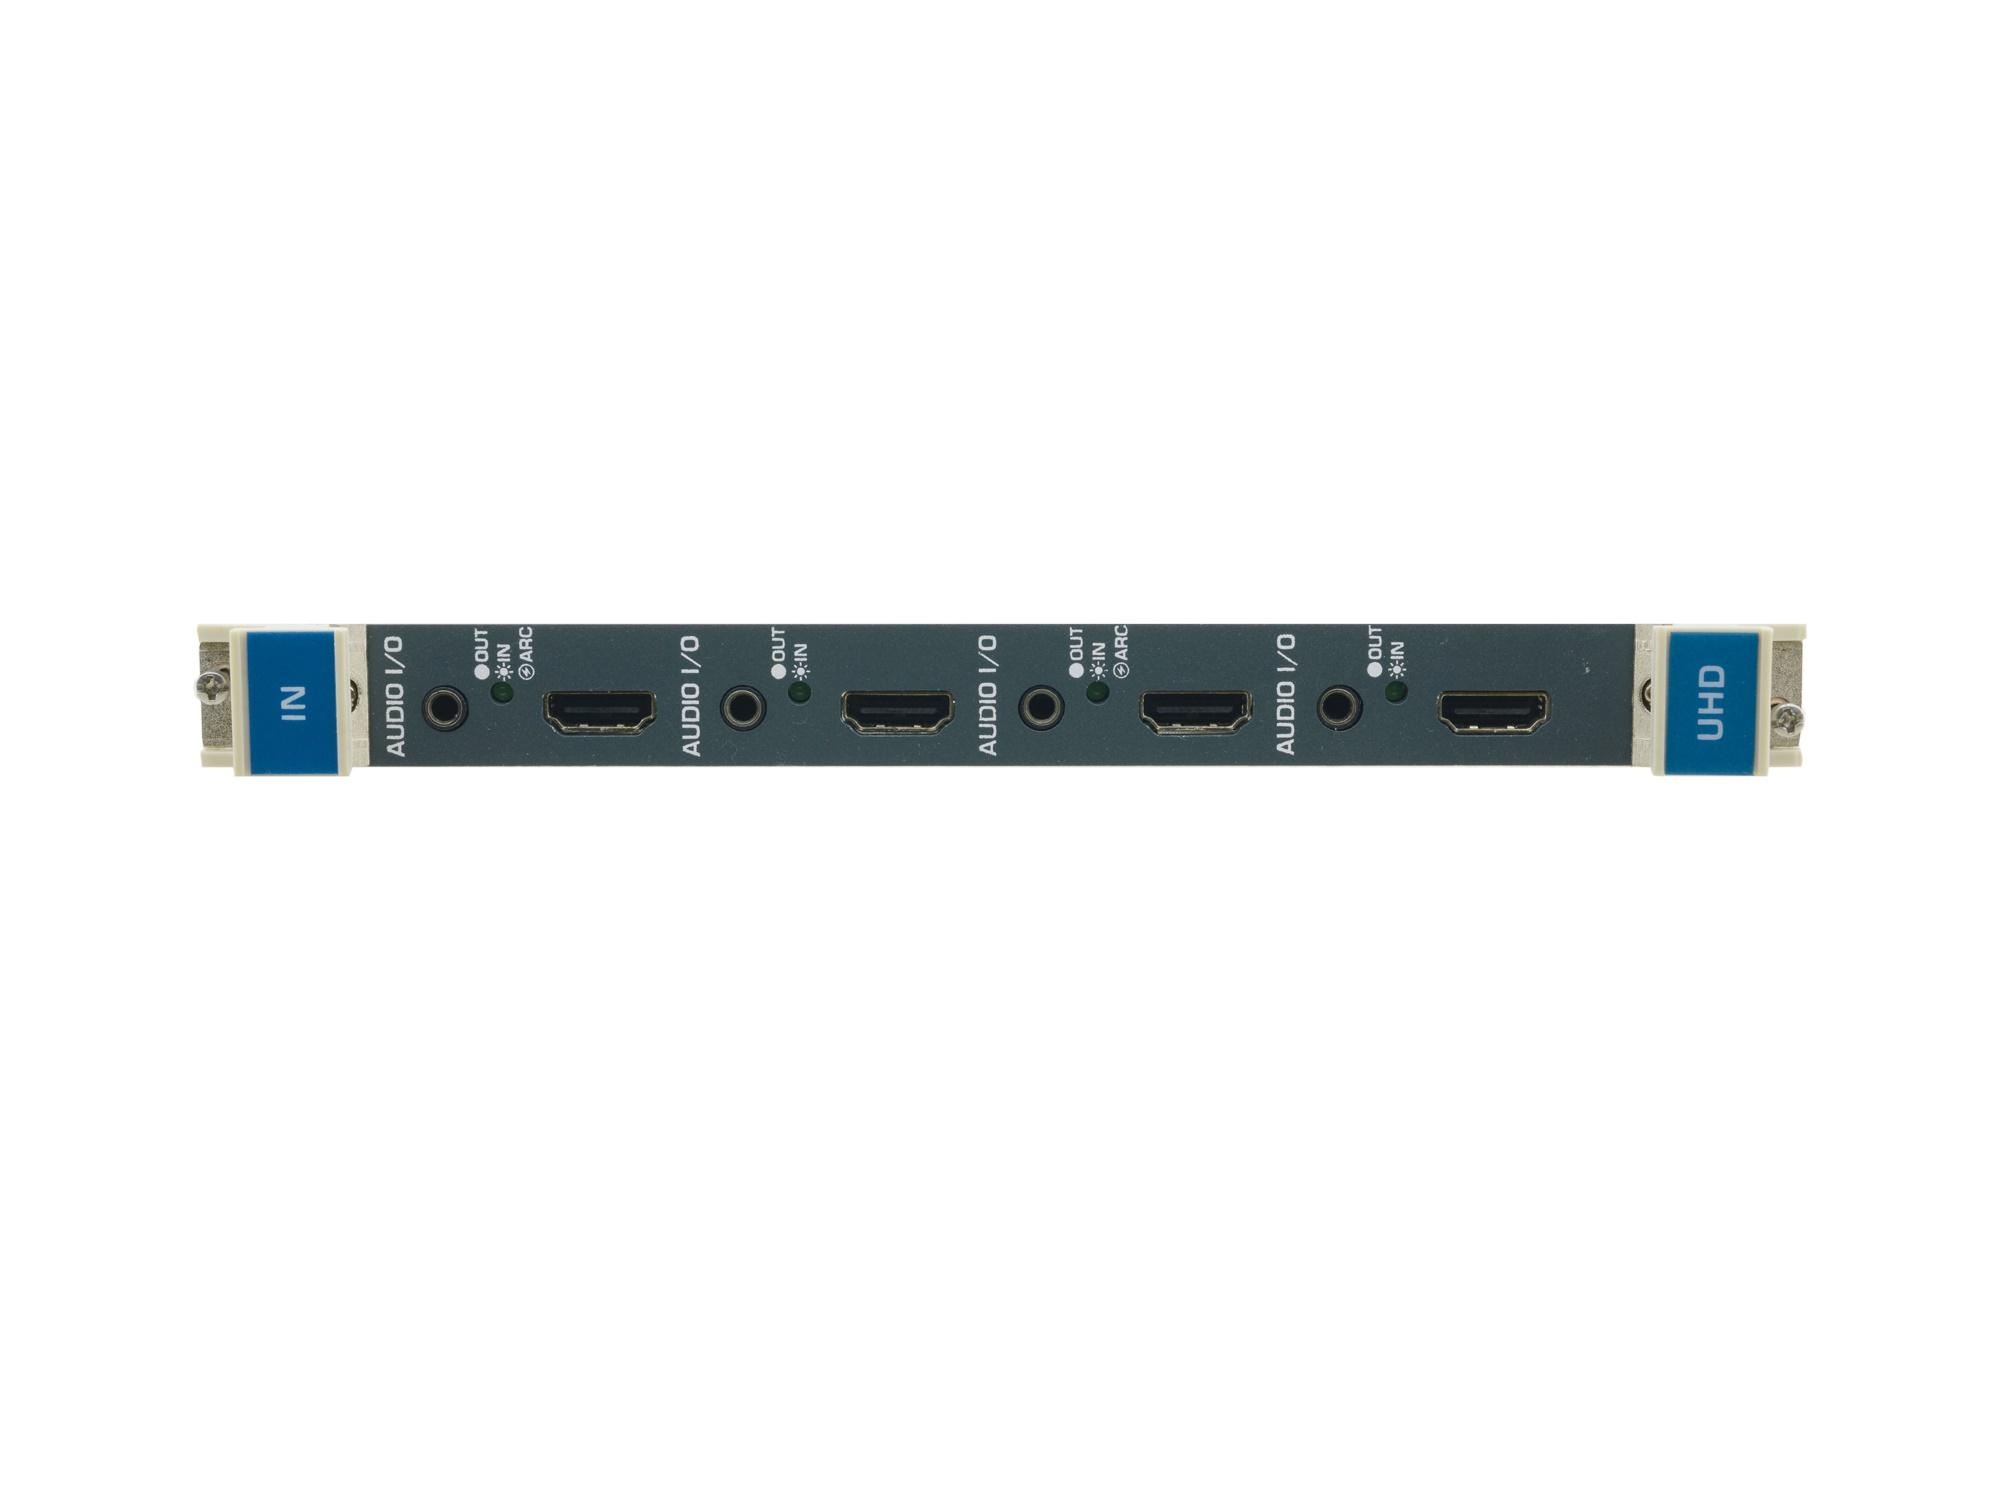 UHDA-IN4-F32 4-Ch 4K60 4x2x0 HDMI Input Card w Selectable Embedded/De-embedded or ARC Analog Audio by Kramer